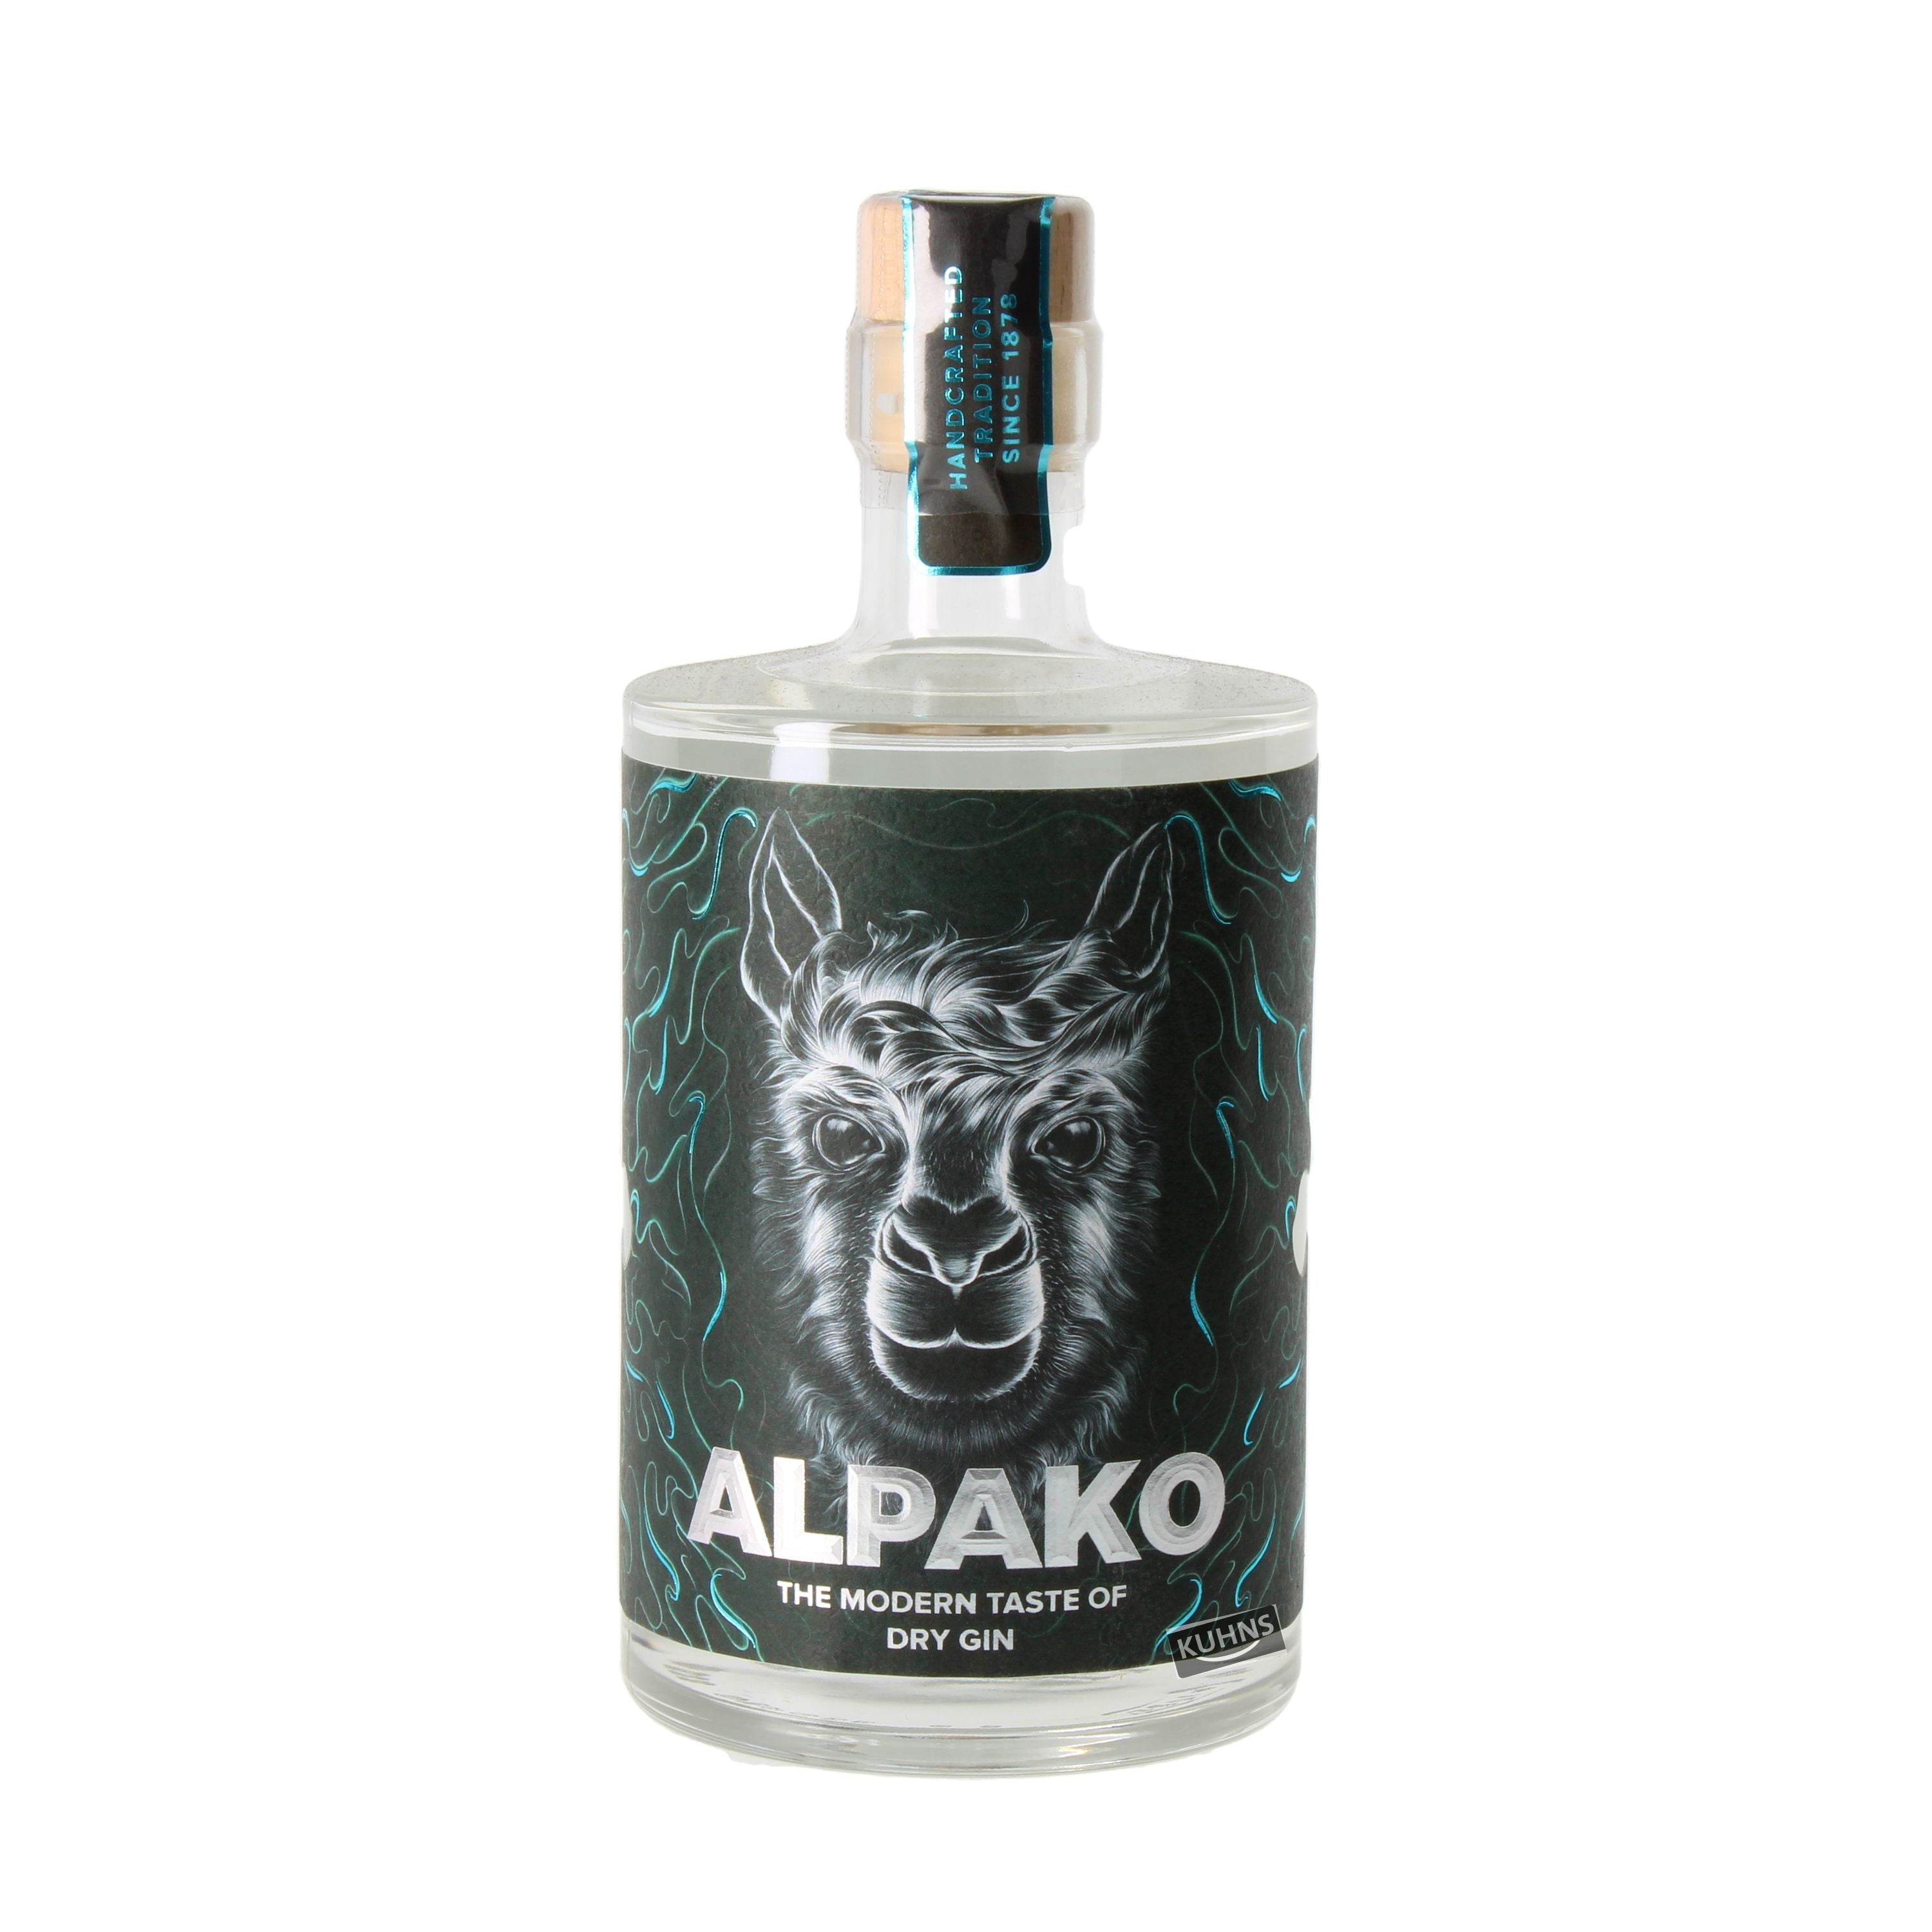 Alpako Dry Gin 0.5l, alc. 43% by volume, Gin Germany